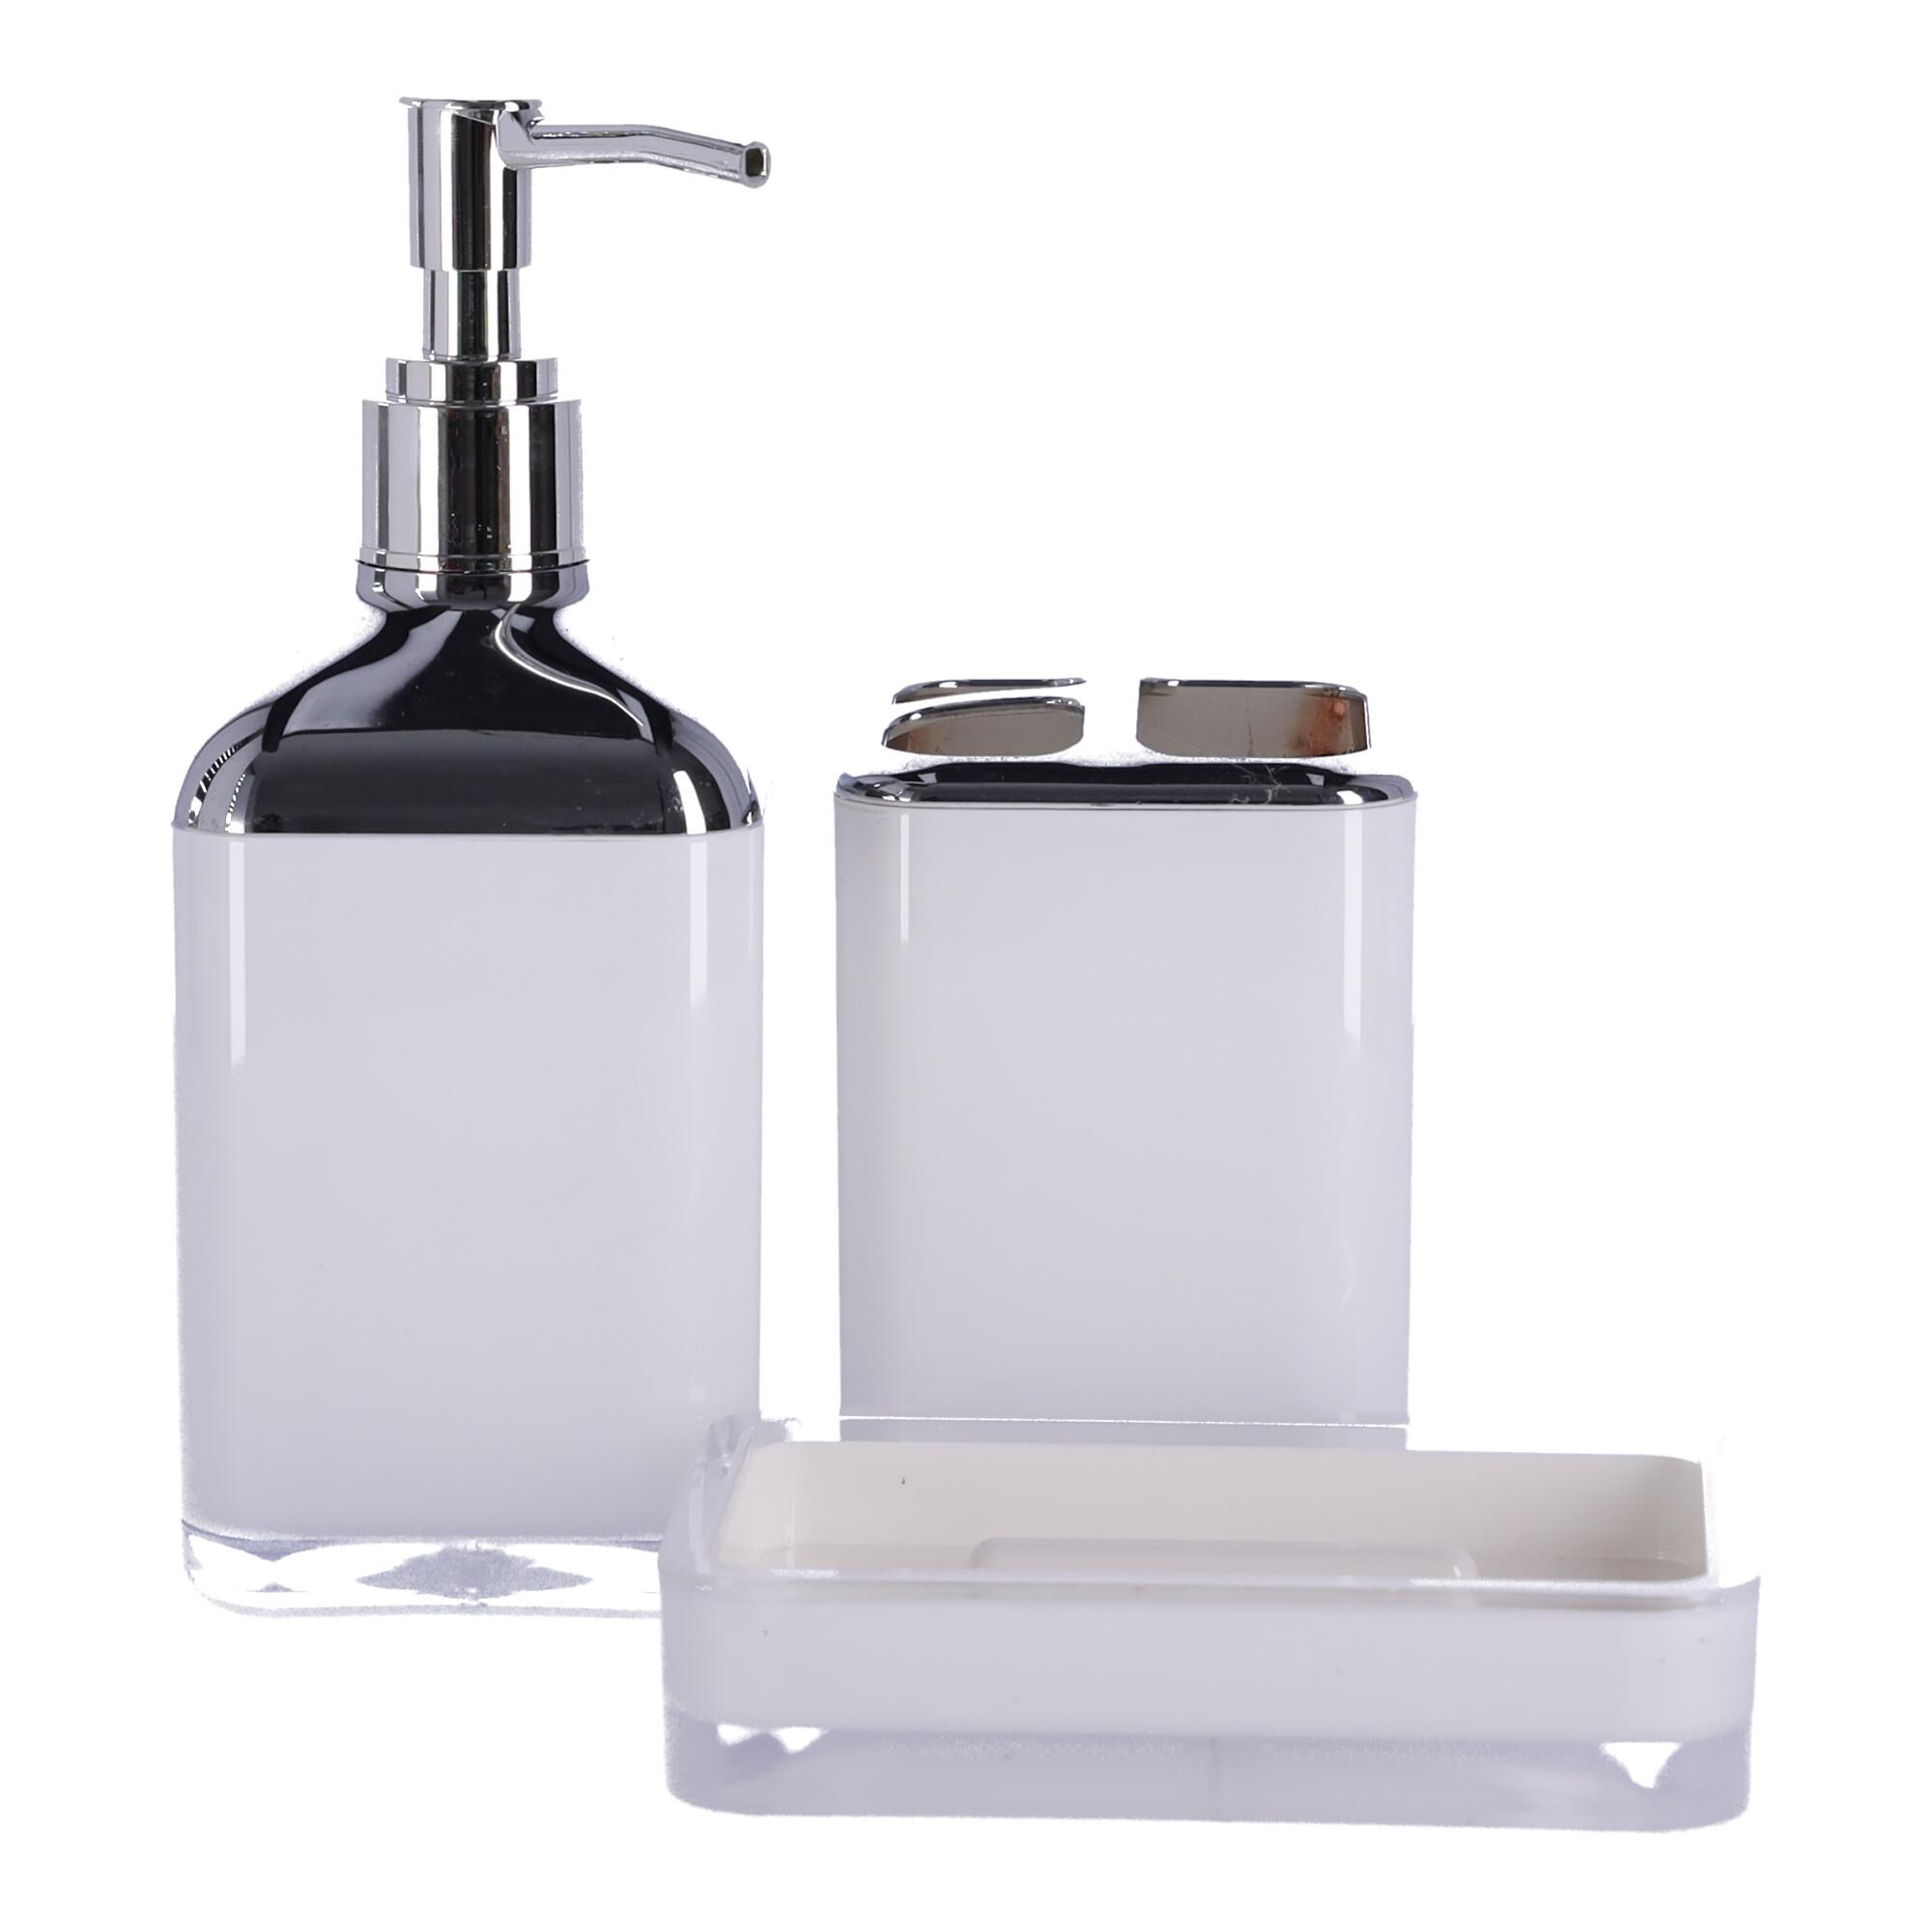 Bathroom accessories set of 3 items BERRETTI, white + chrome